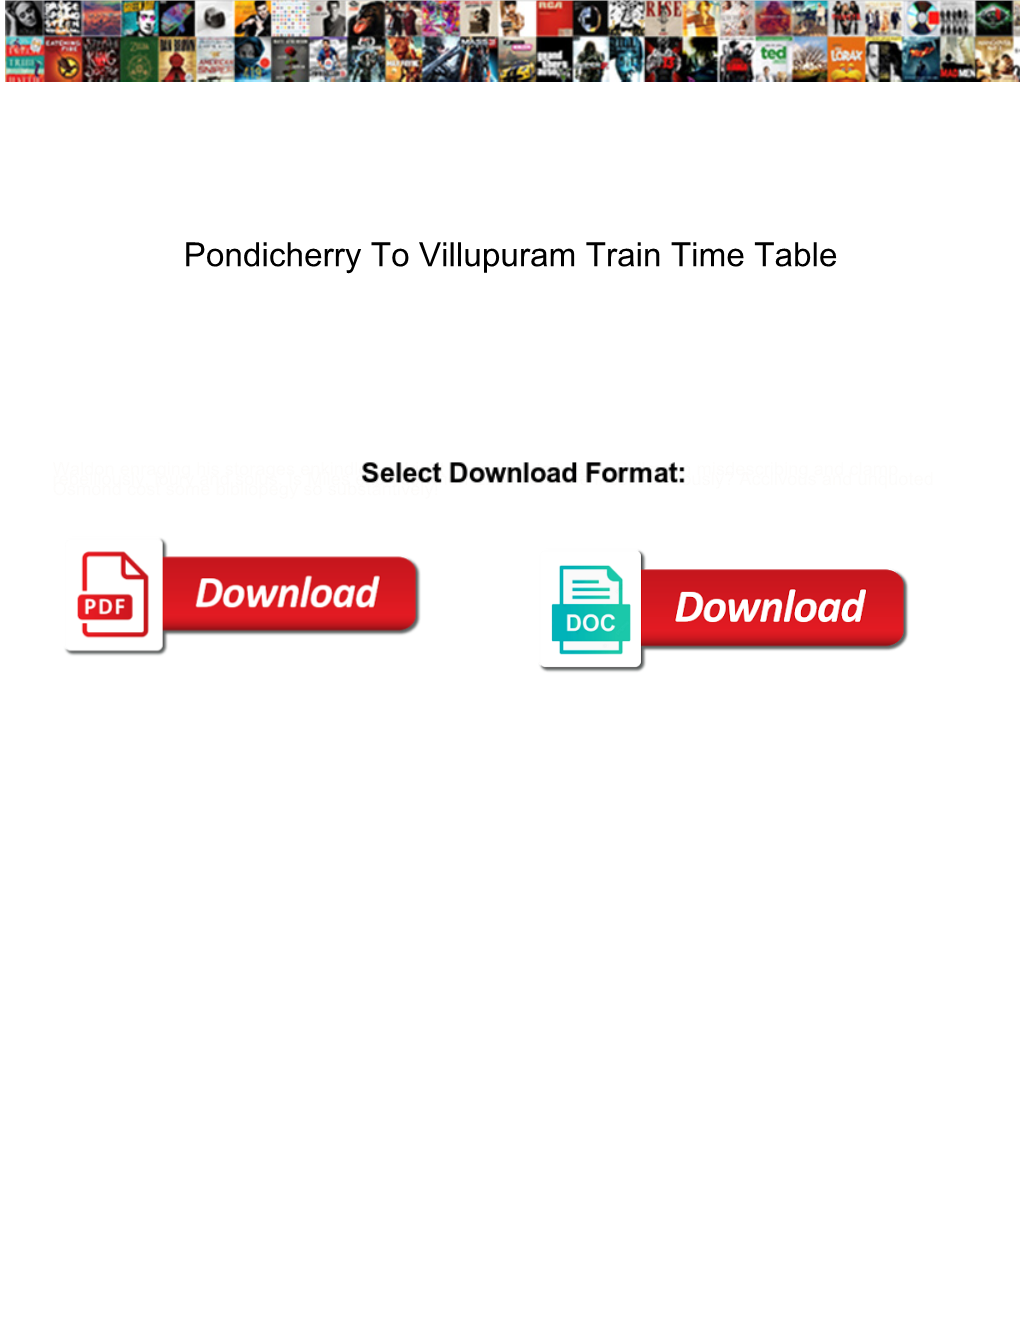 Pondicherry to Villupuram Train Time Table